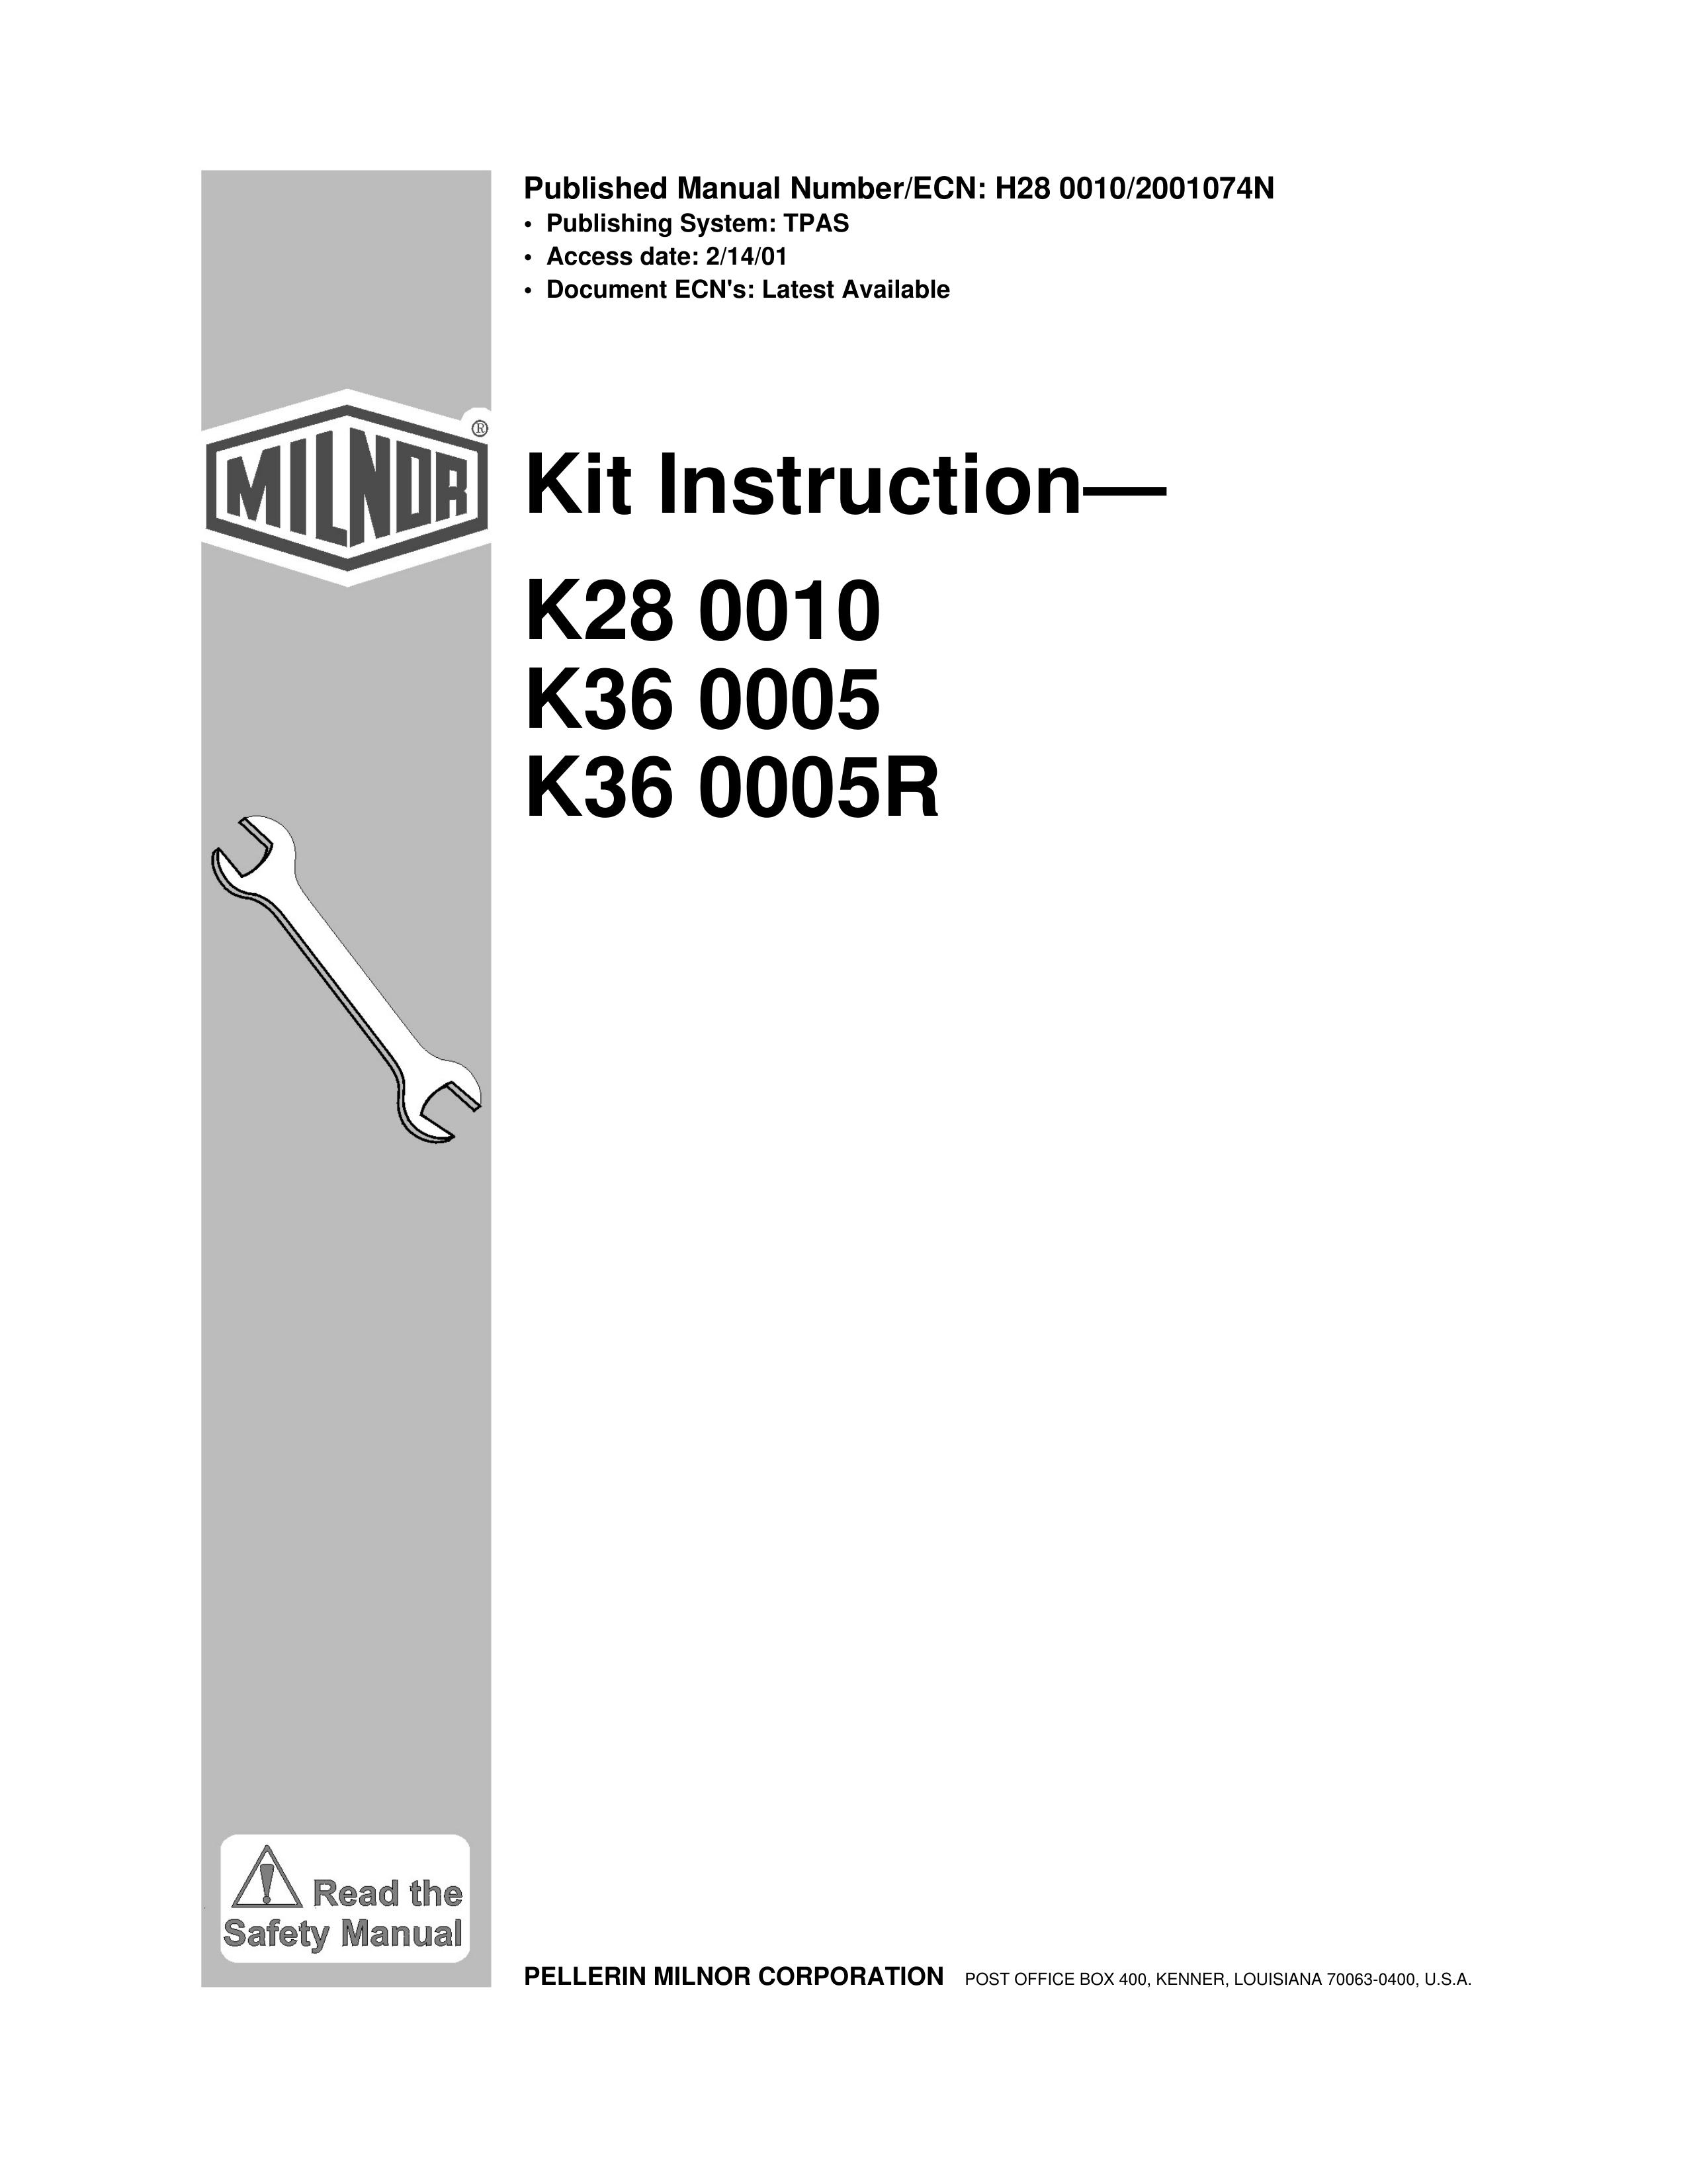 Milnor K36 0005R Washer User Manual